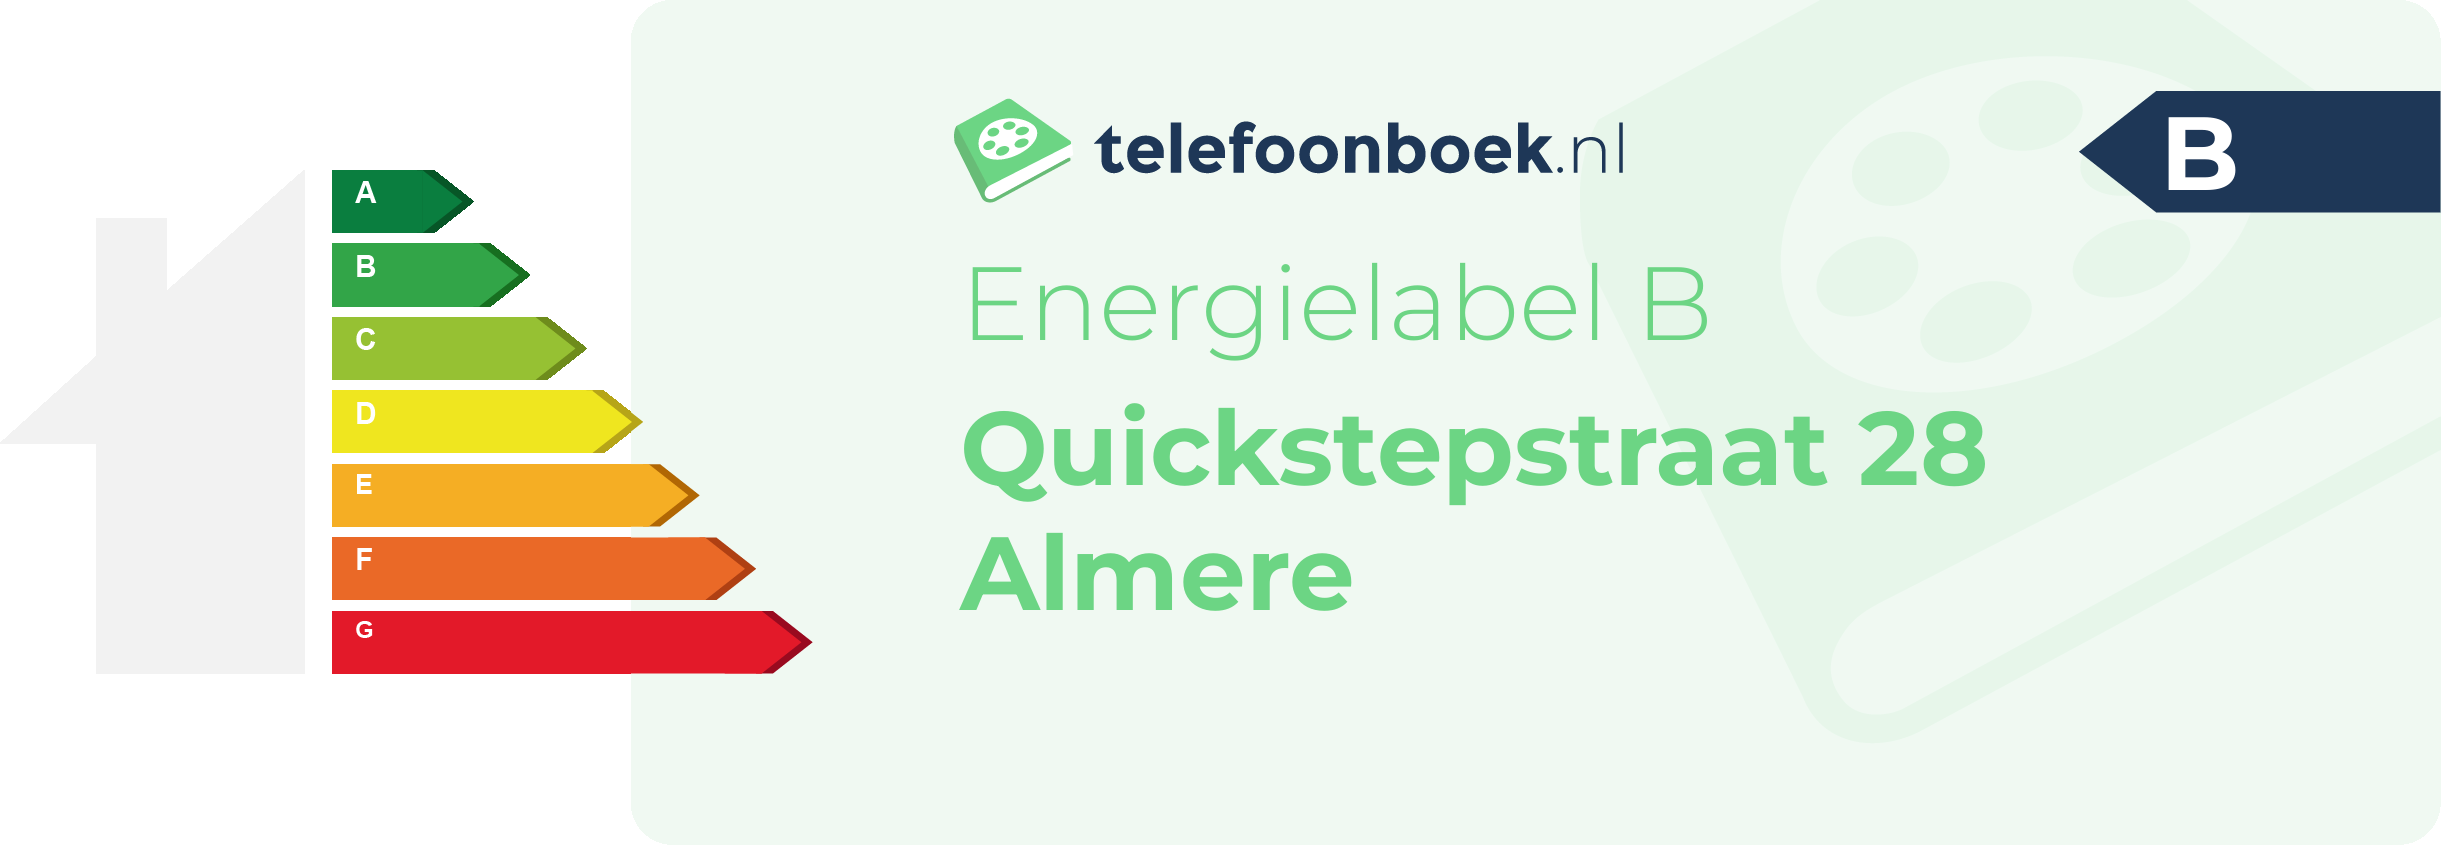 Energielabel Quickstepstraat 28 Almere